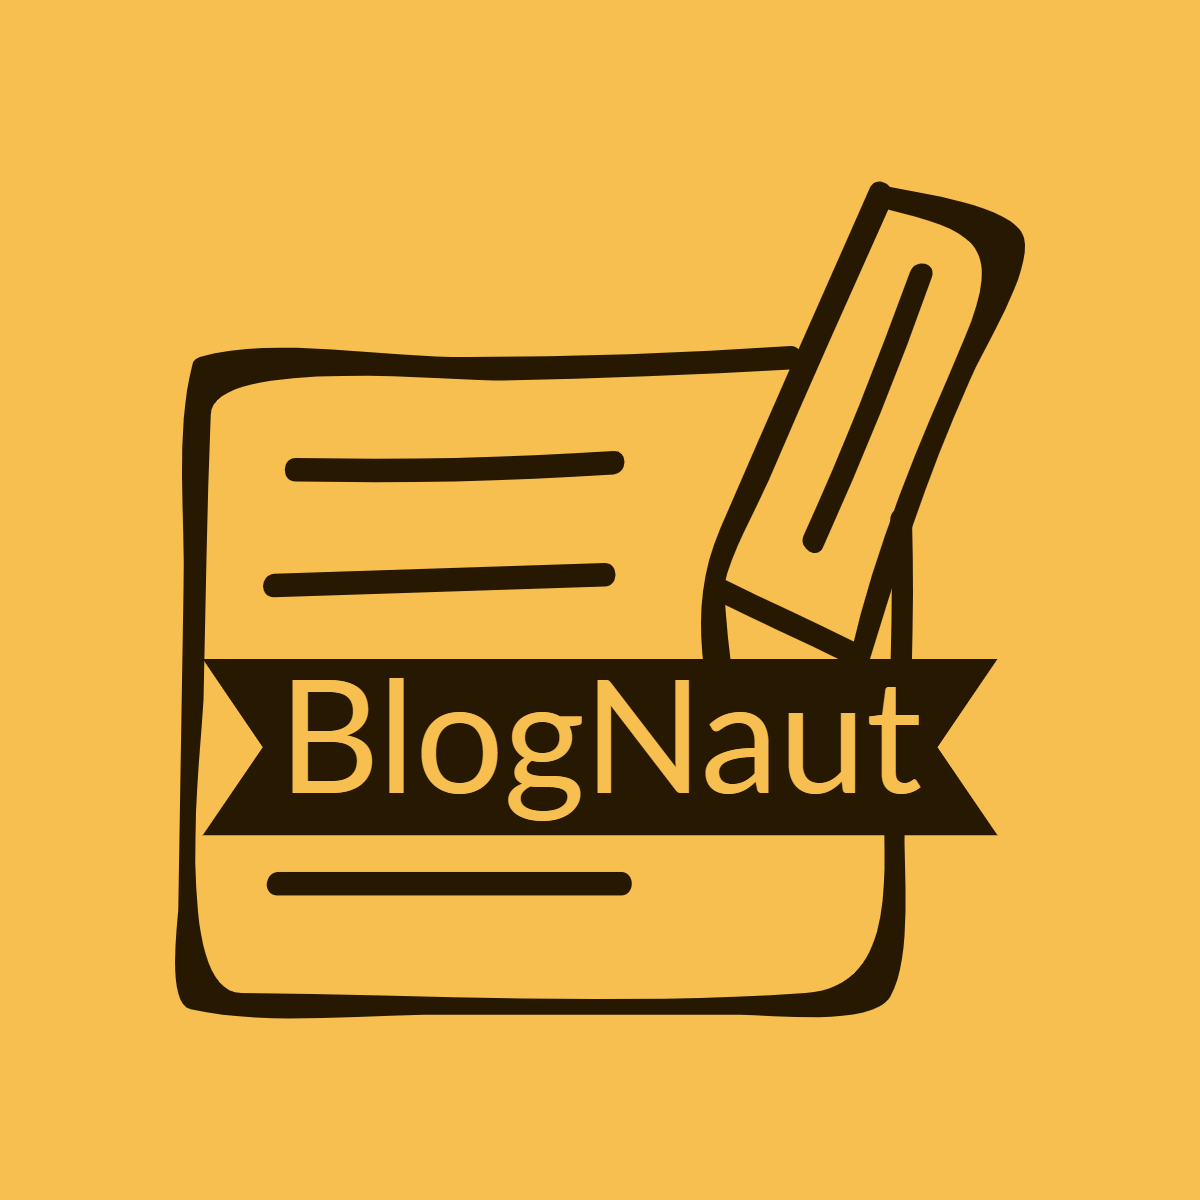 BlogNaut